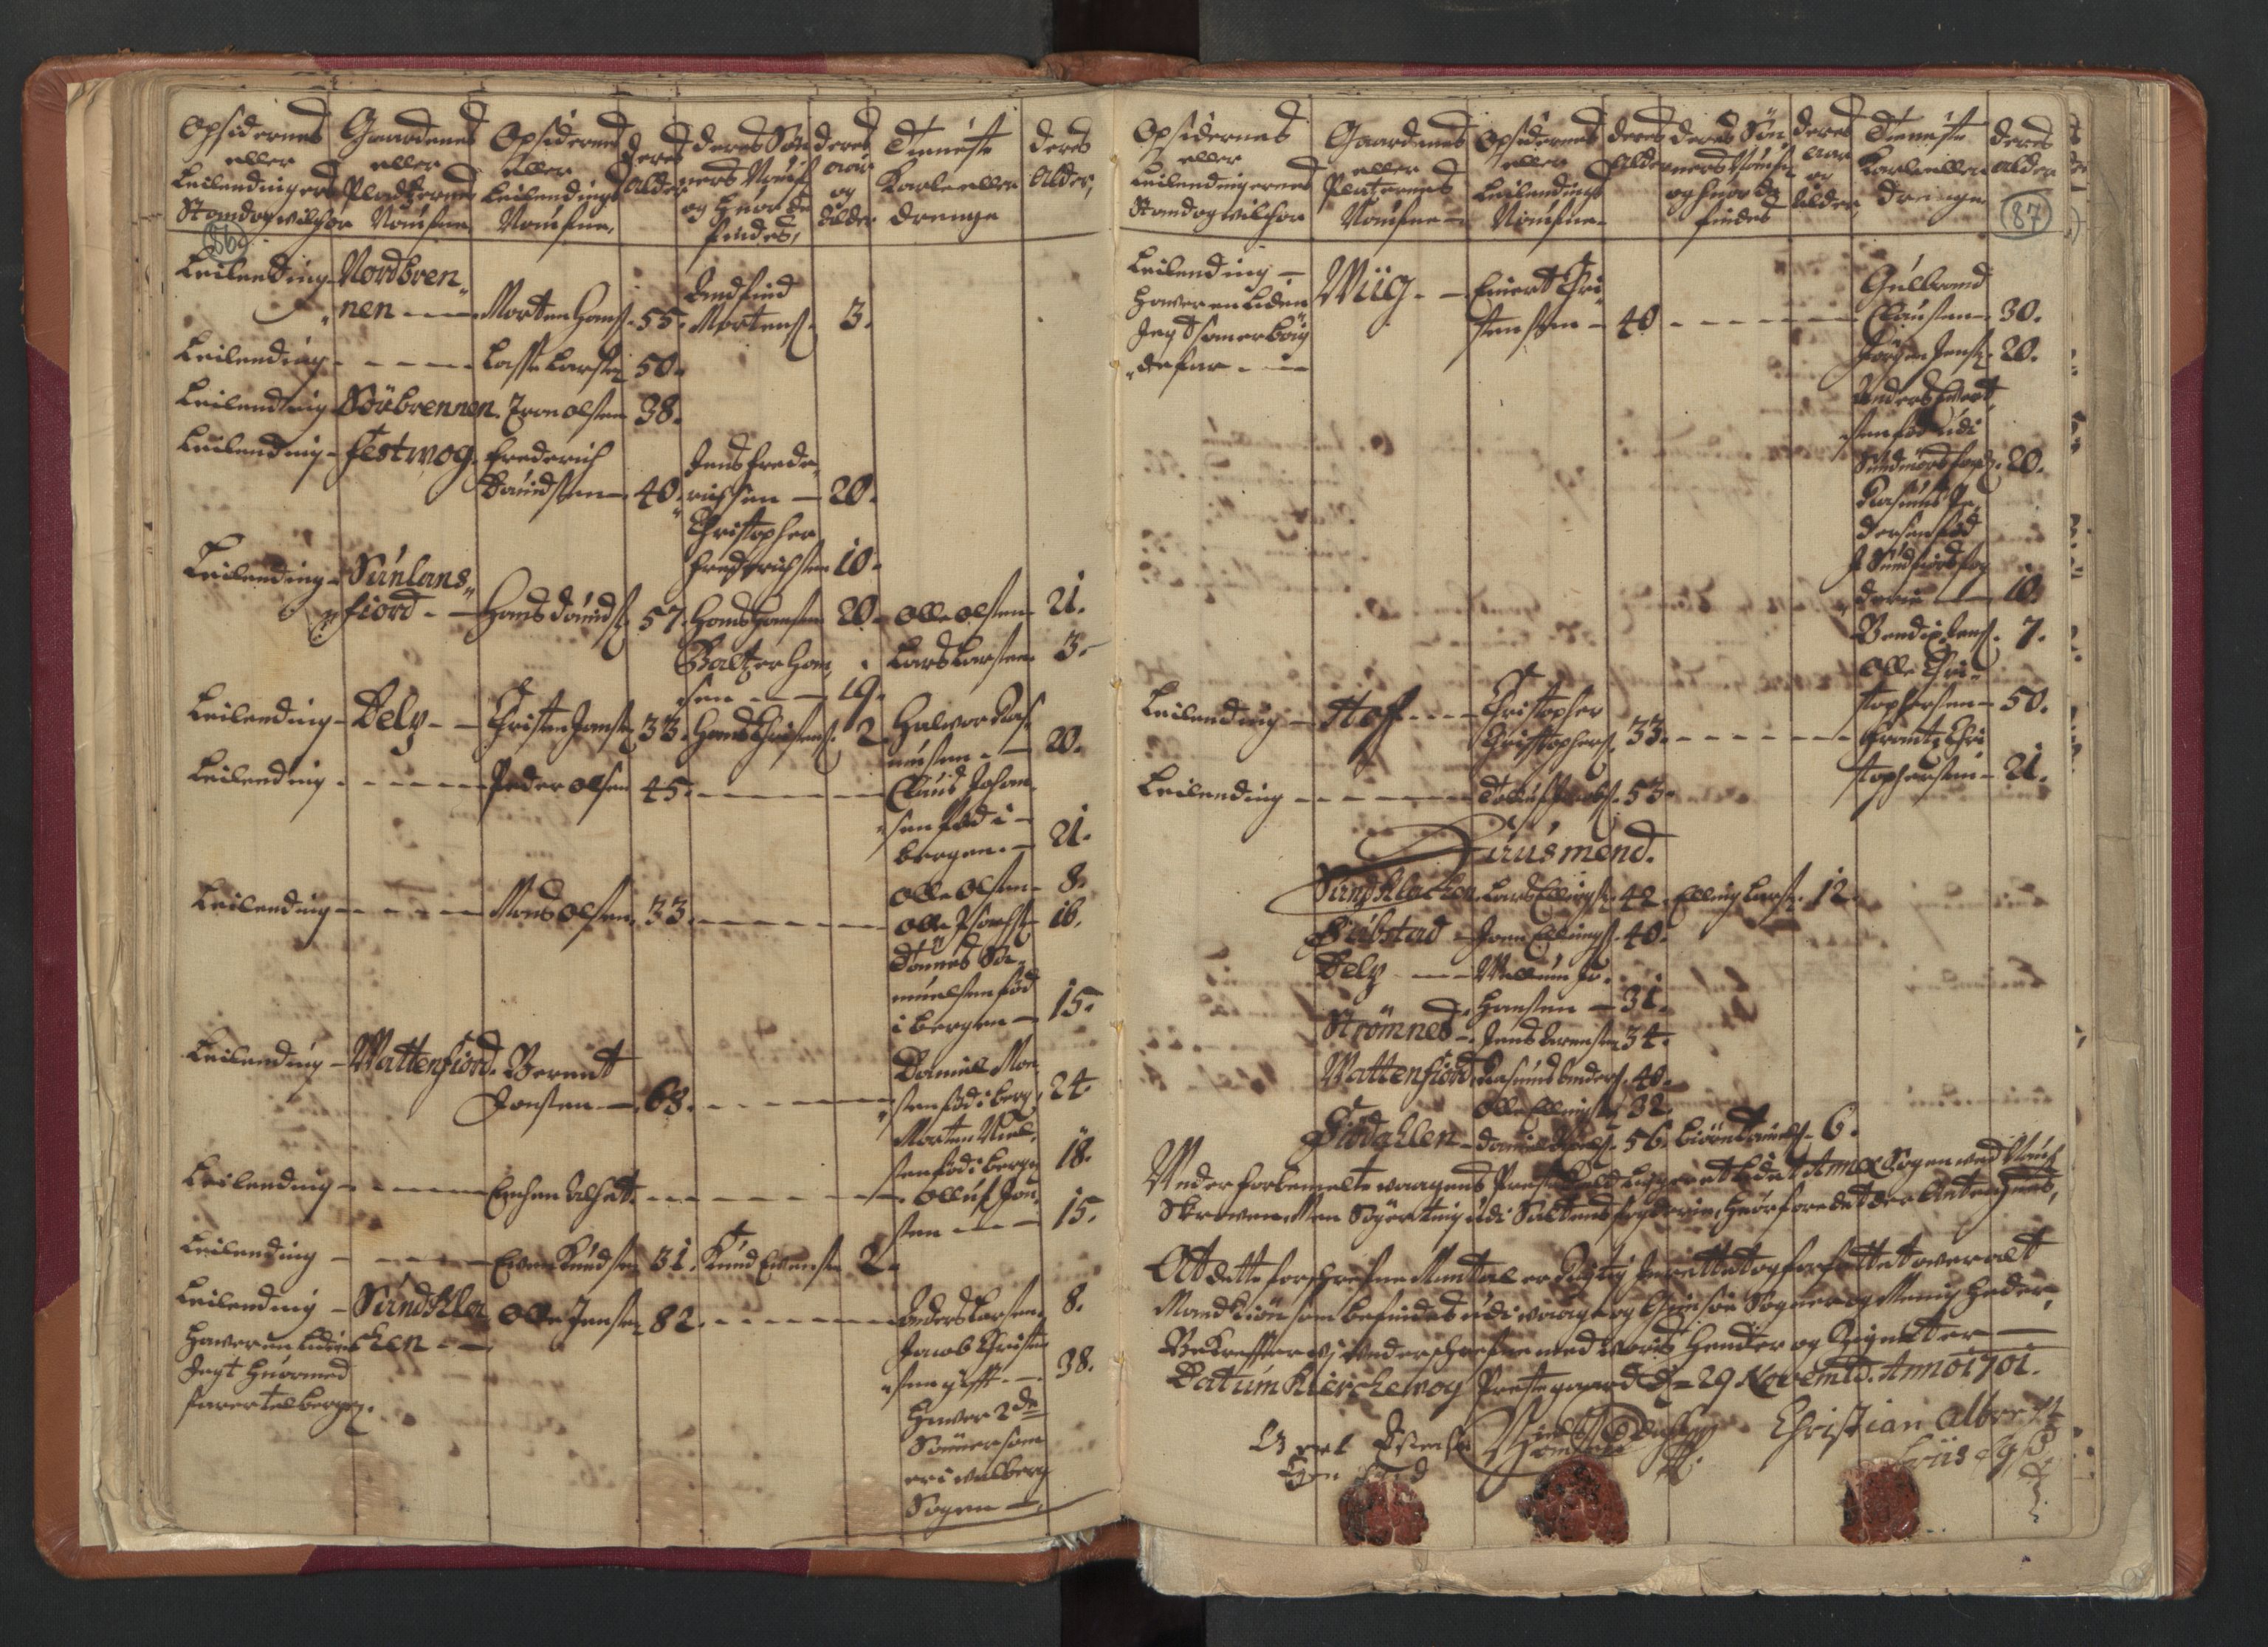 RA, Manntallet 1701, nr. 18: Vesterålen, Andenes og Lofoten fogderi, 1701, s. 86-87